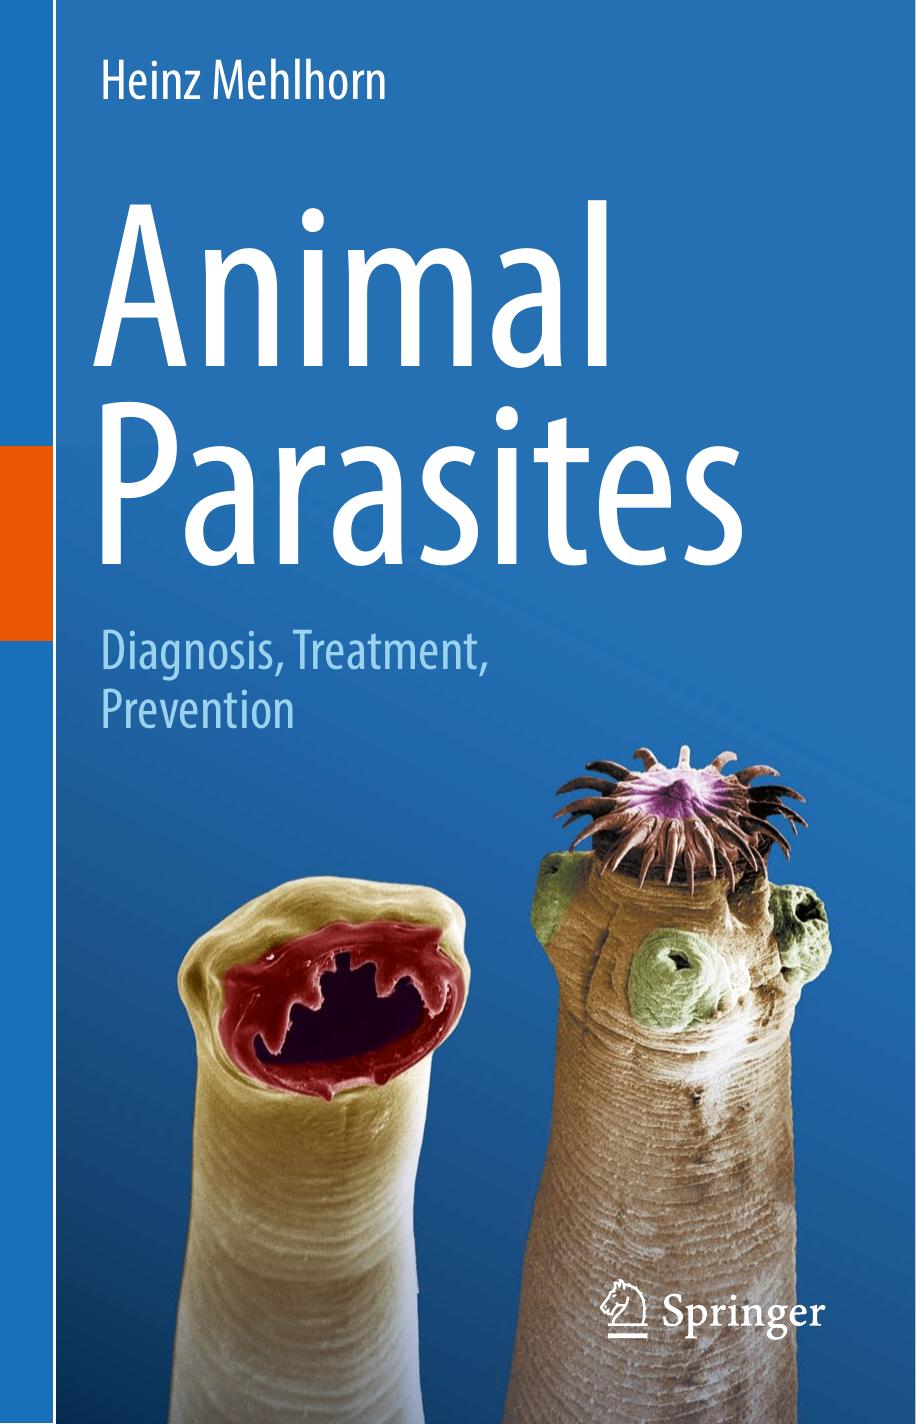 Animal Parasites - Diagnosis, Treatment, Prevention